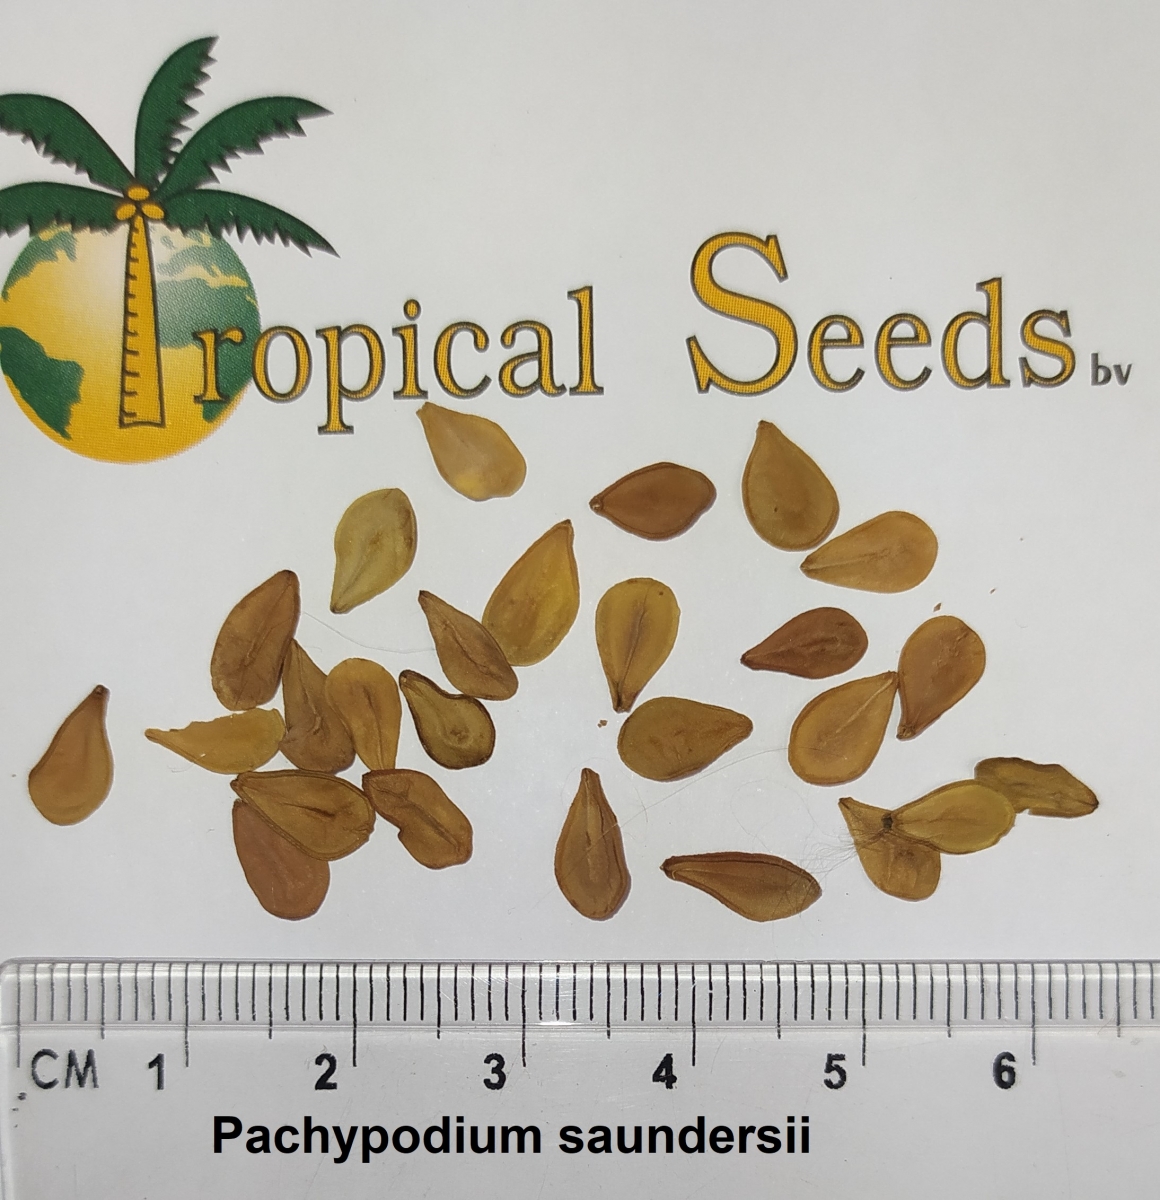 Pachypodium saundersii Seeds